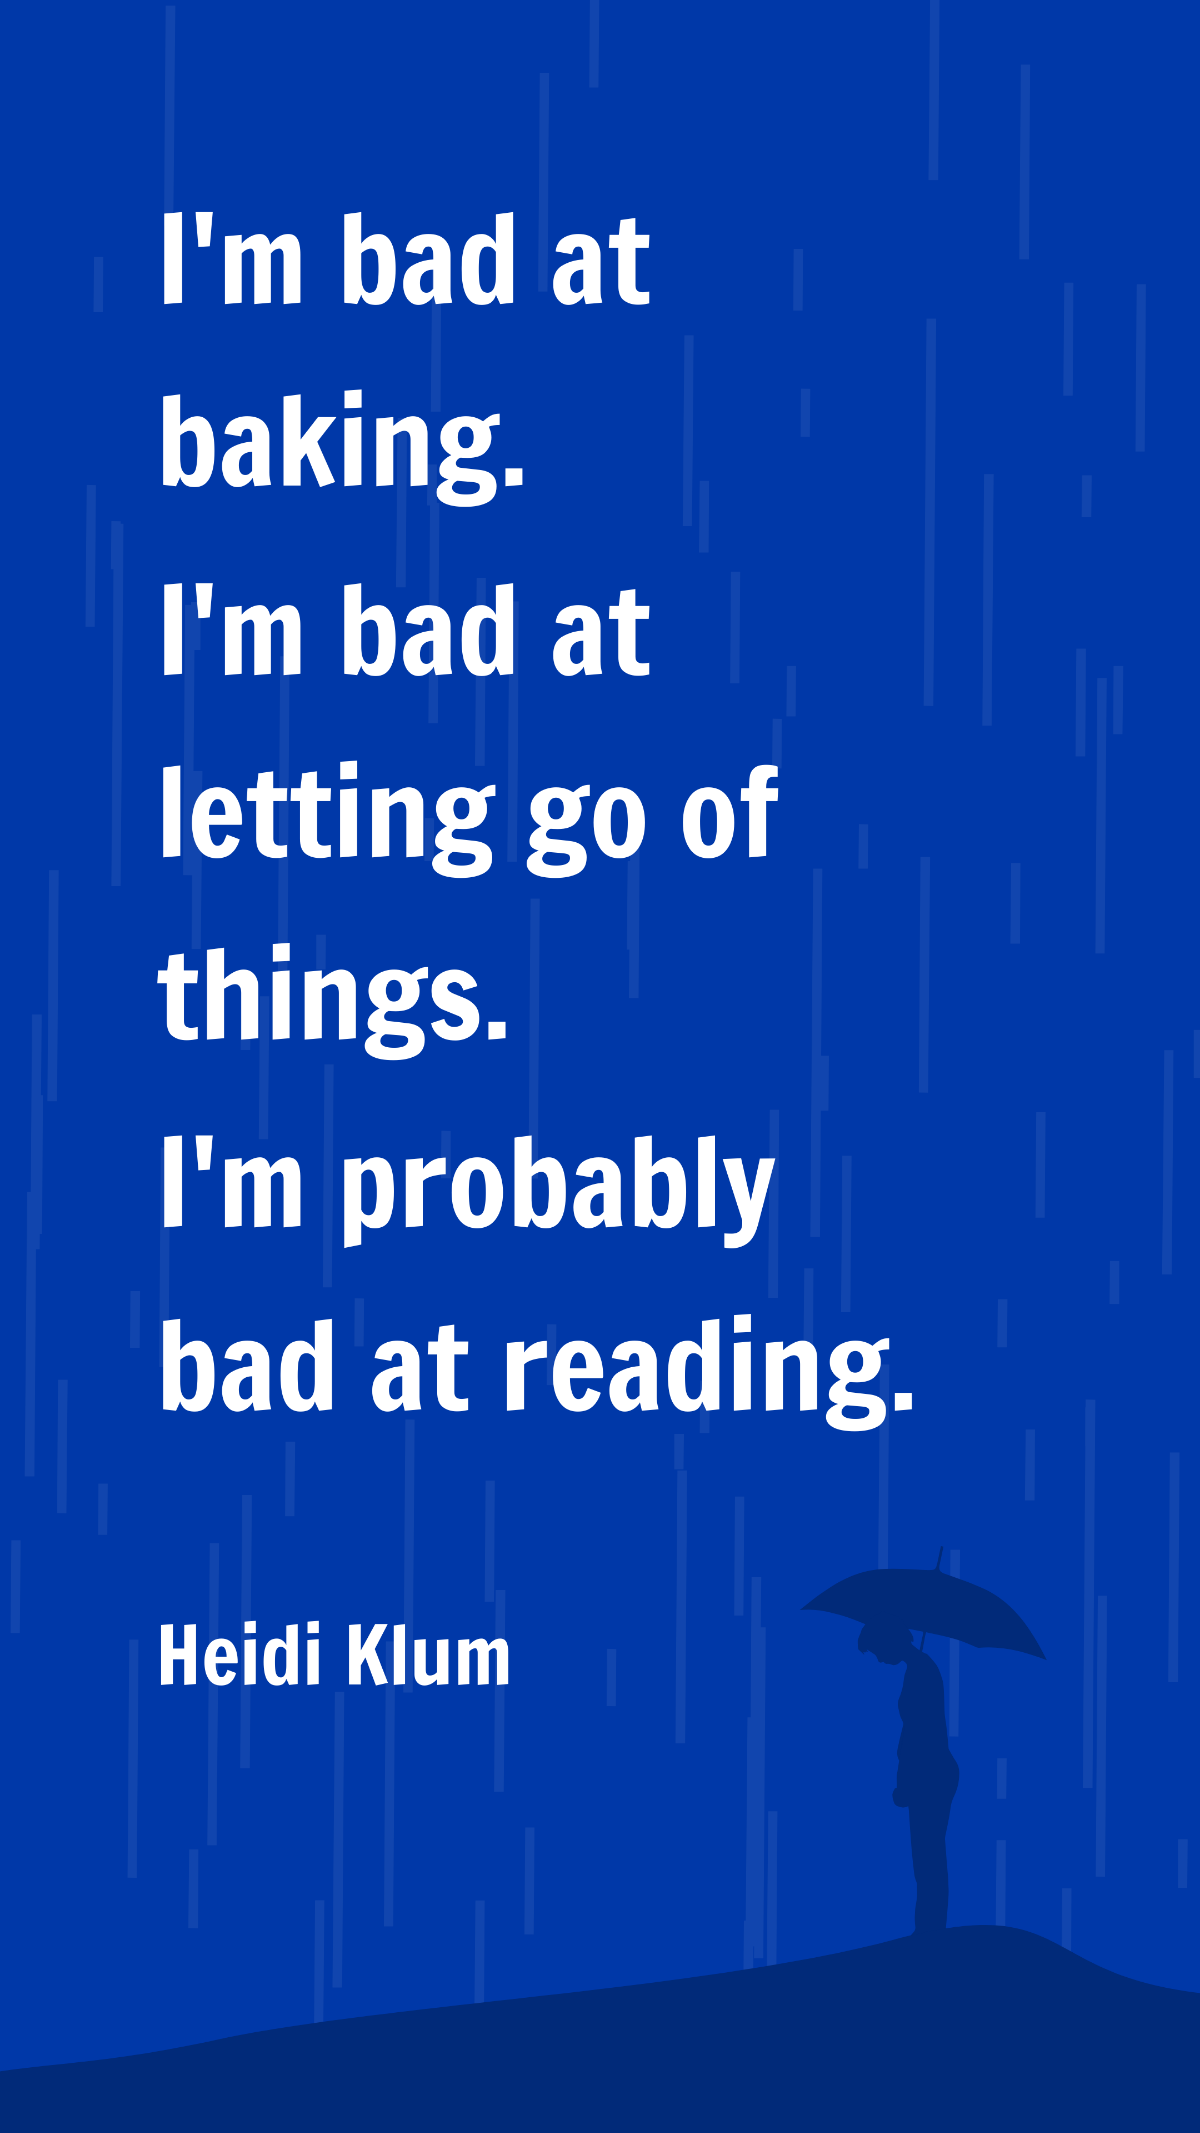 Heidi Klum - I'm bad at baking. I'm bad at letting go of things. I'm probably bad at reading.